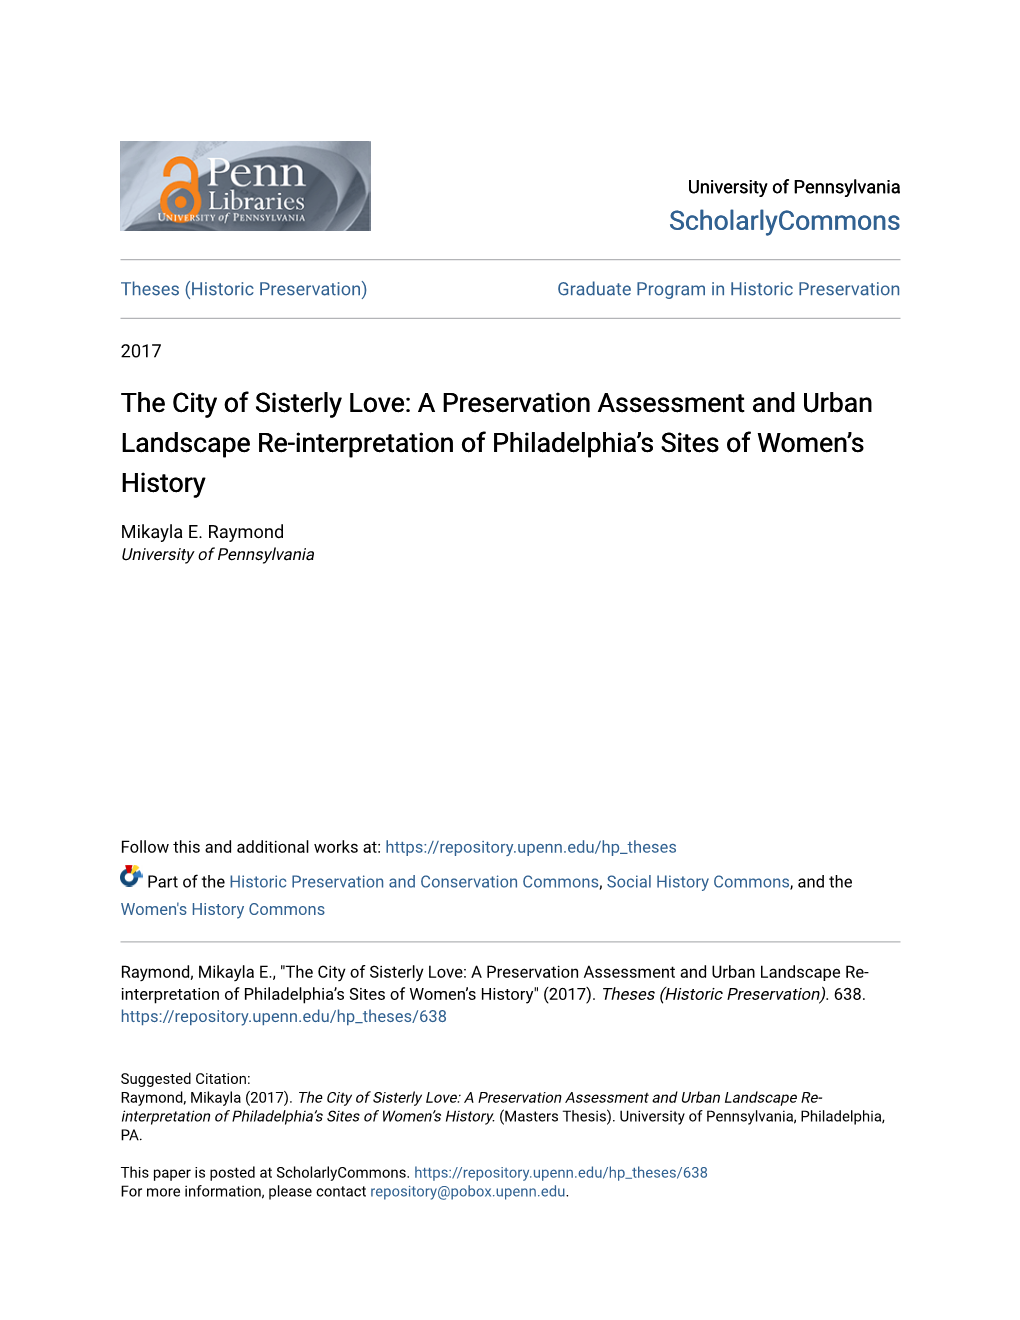 A Preservation Assessment and Urban Landscape Re-Interpretation of Philadelphia’S Sites of Women’S History